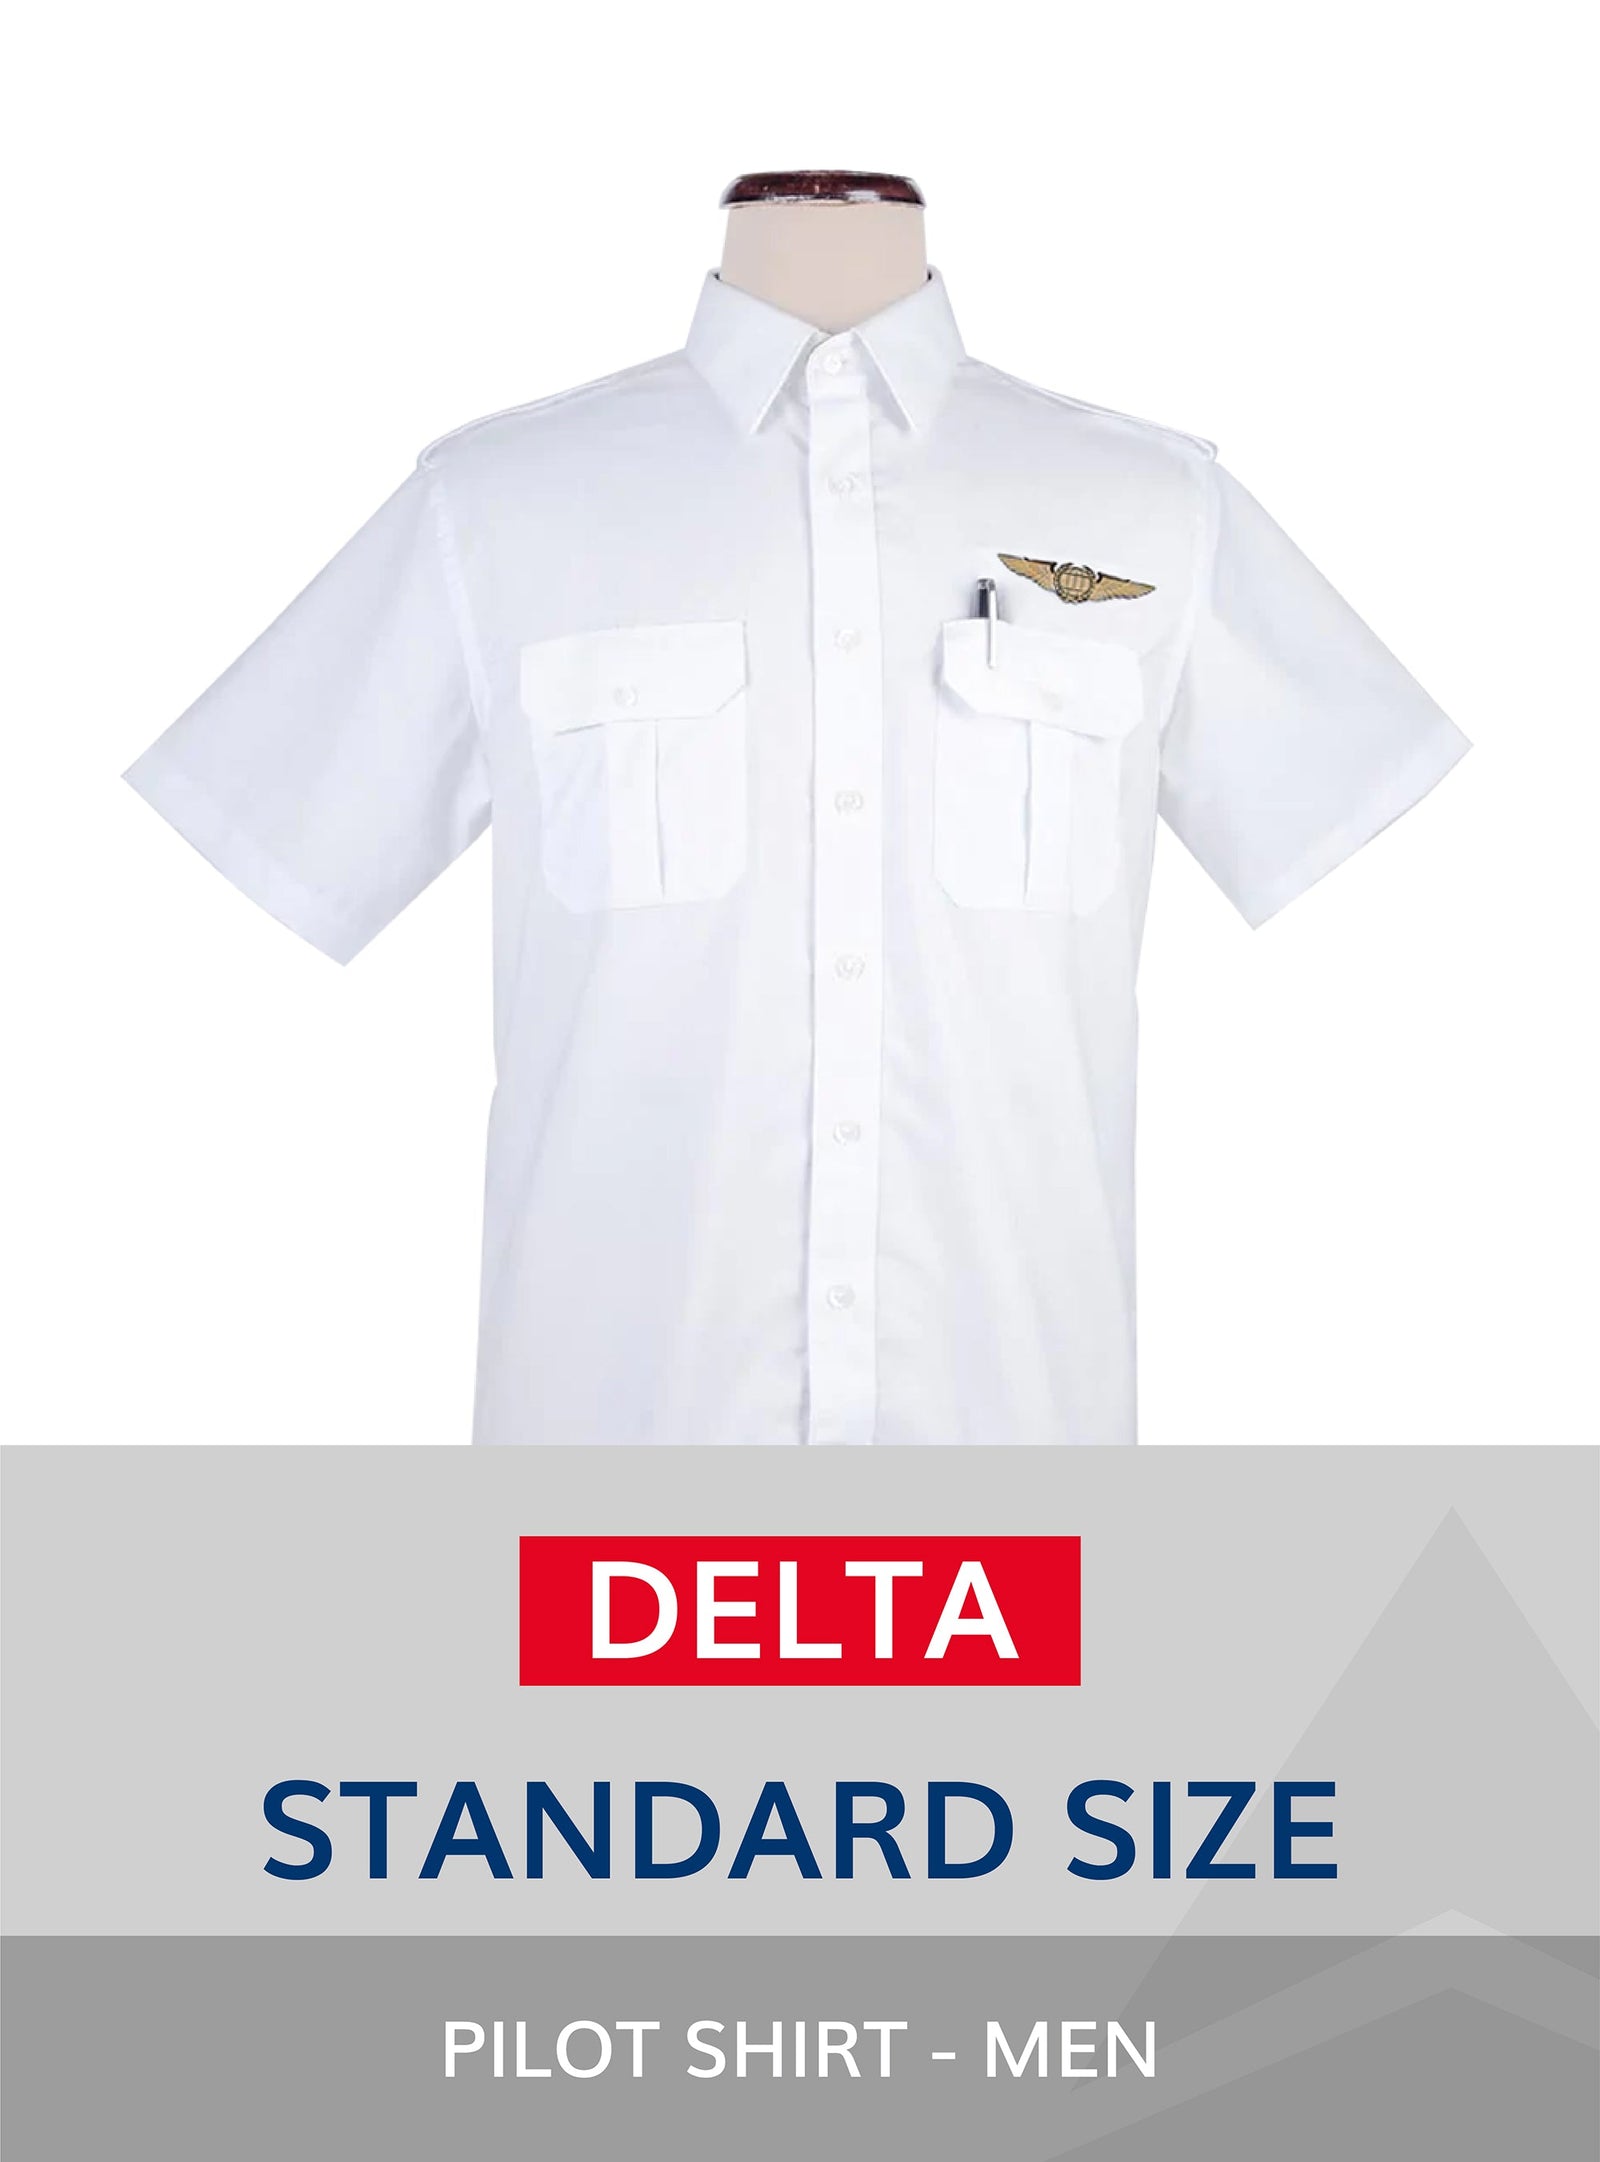 Delta Standard Size Pilot Shirt for Men